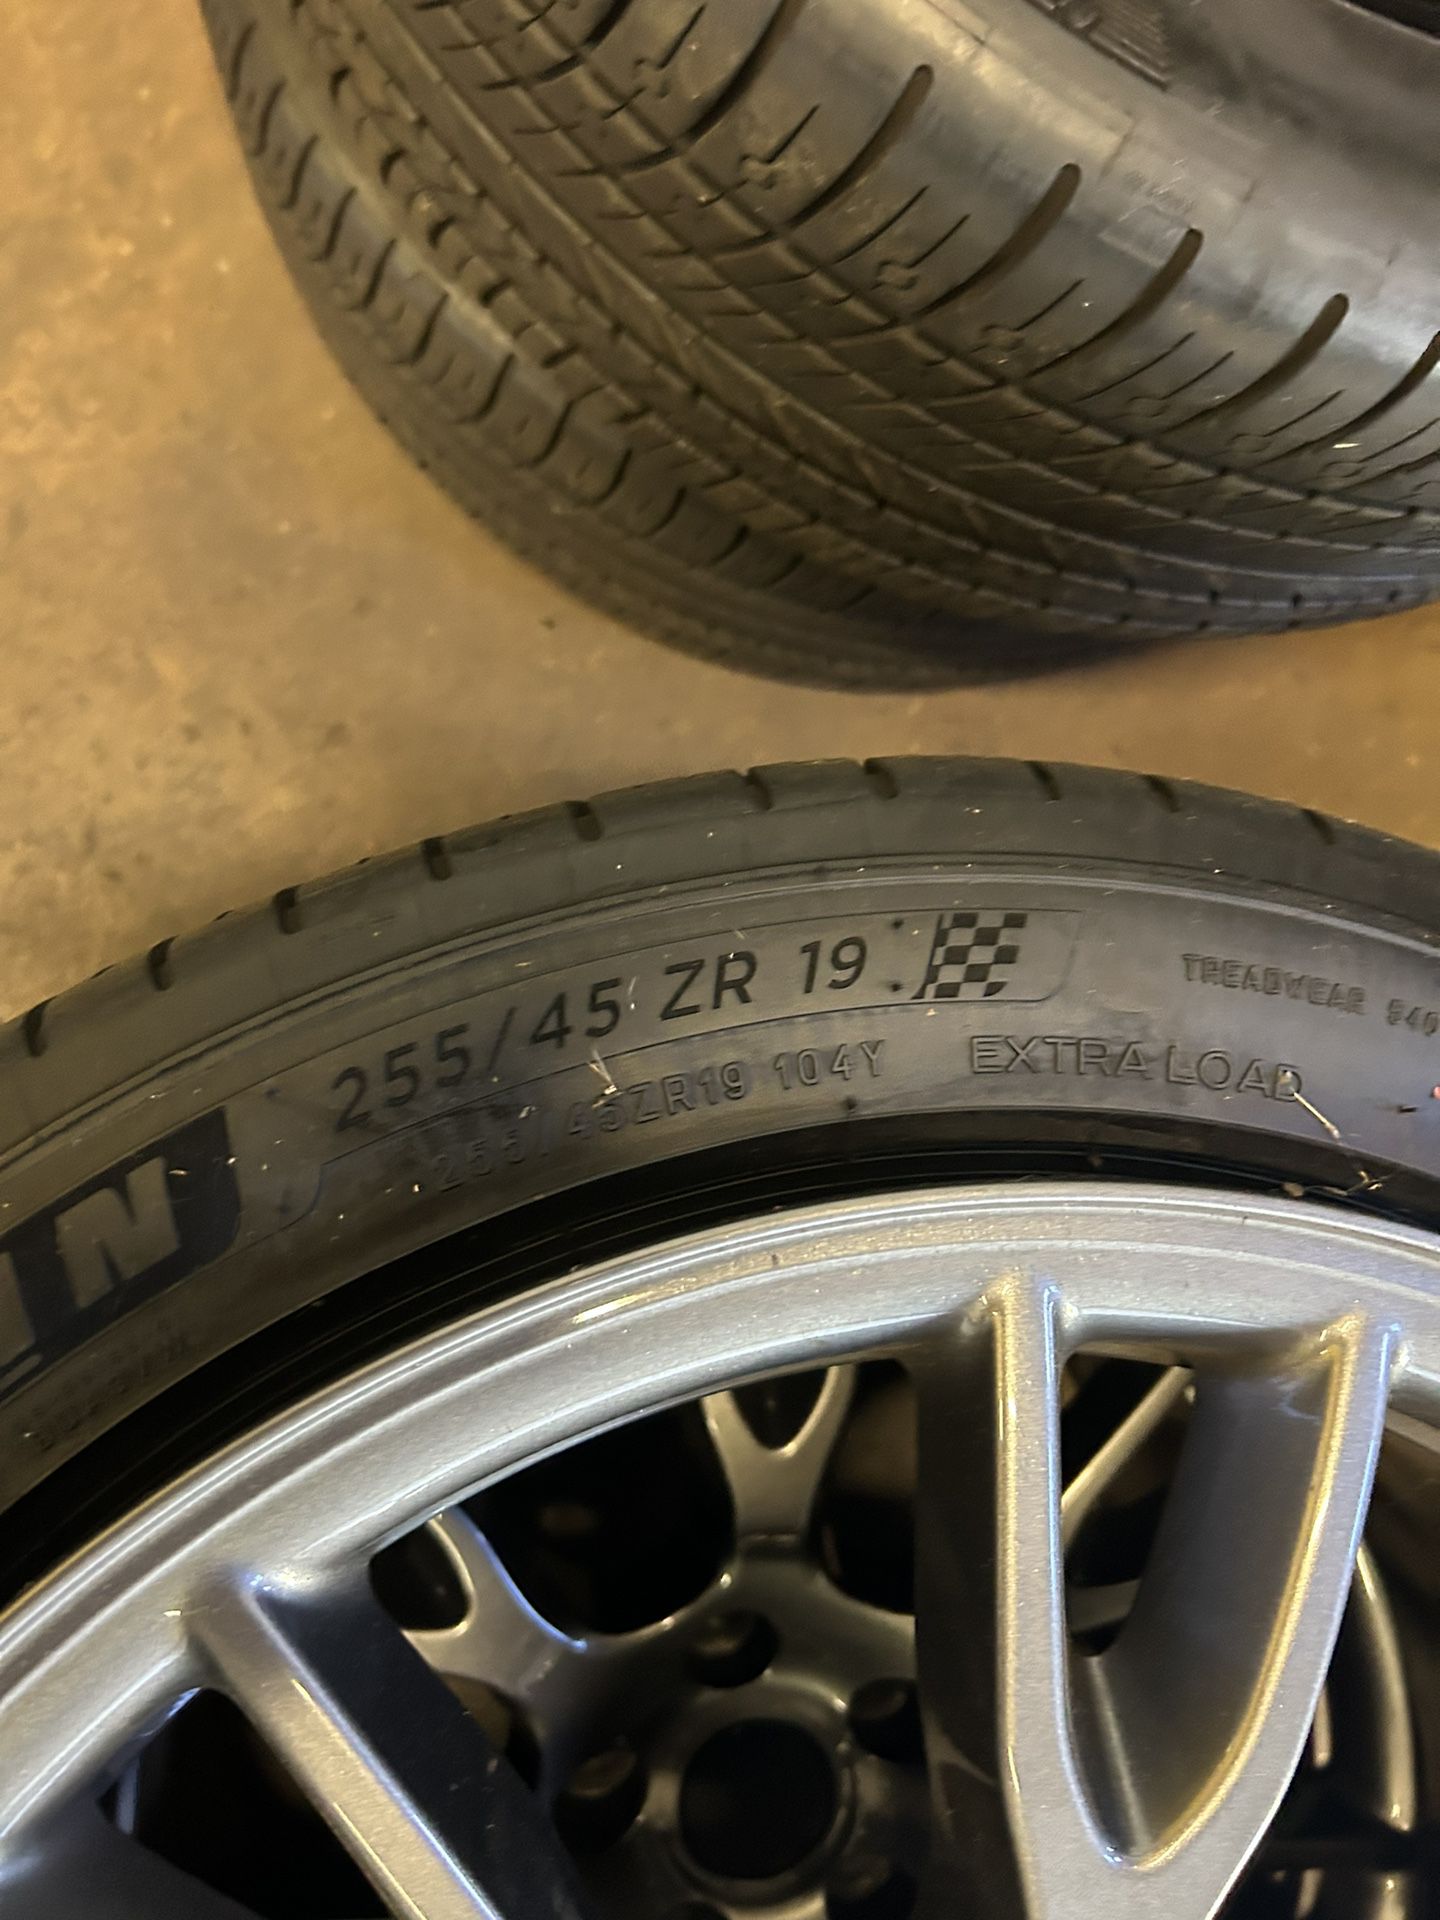 Tesla Plaid Wheels And Tires 